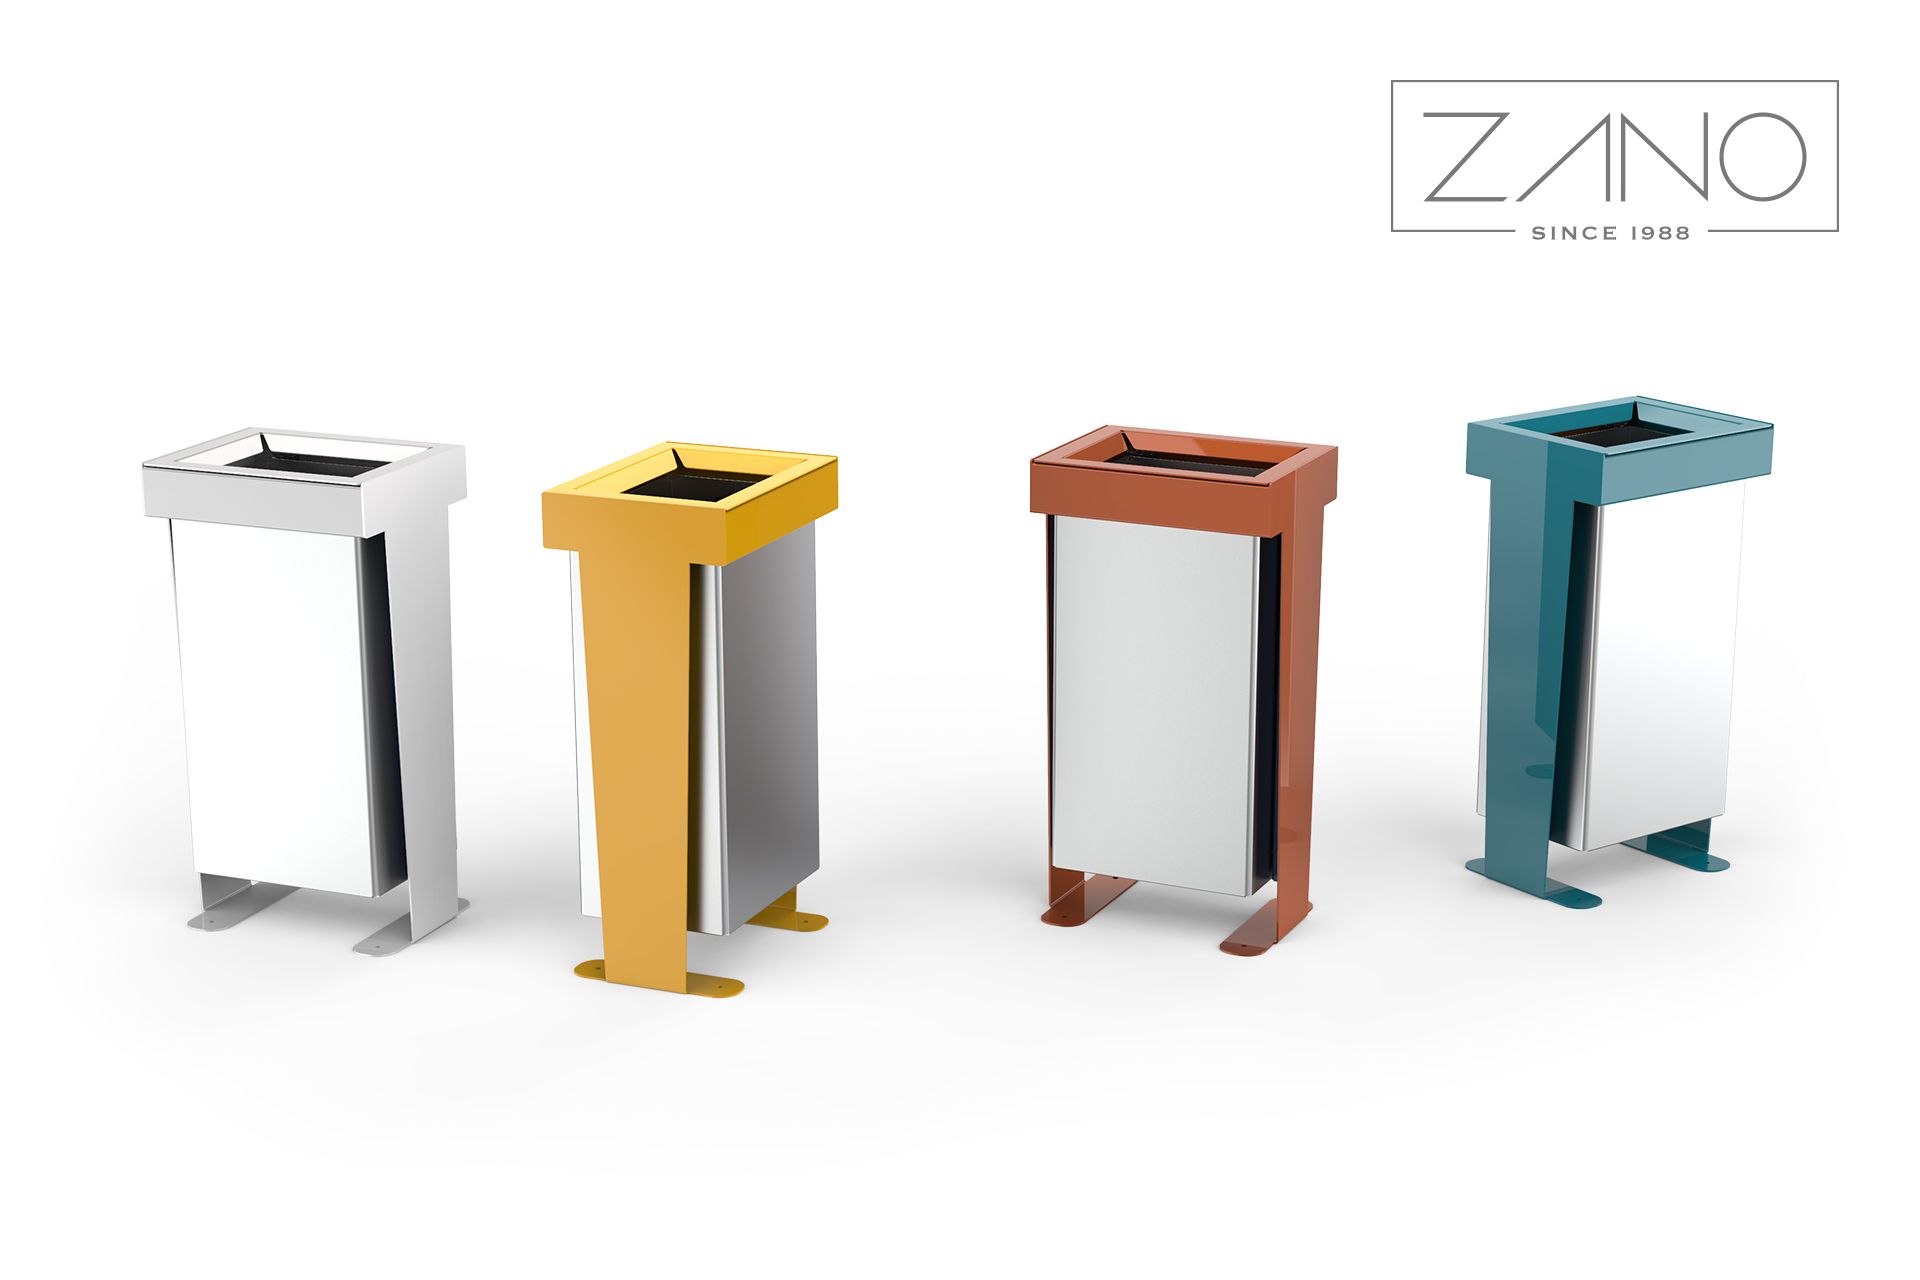 Waste bins | ZANO urban furniture